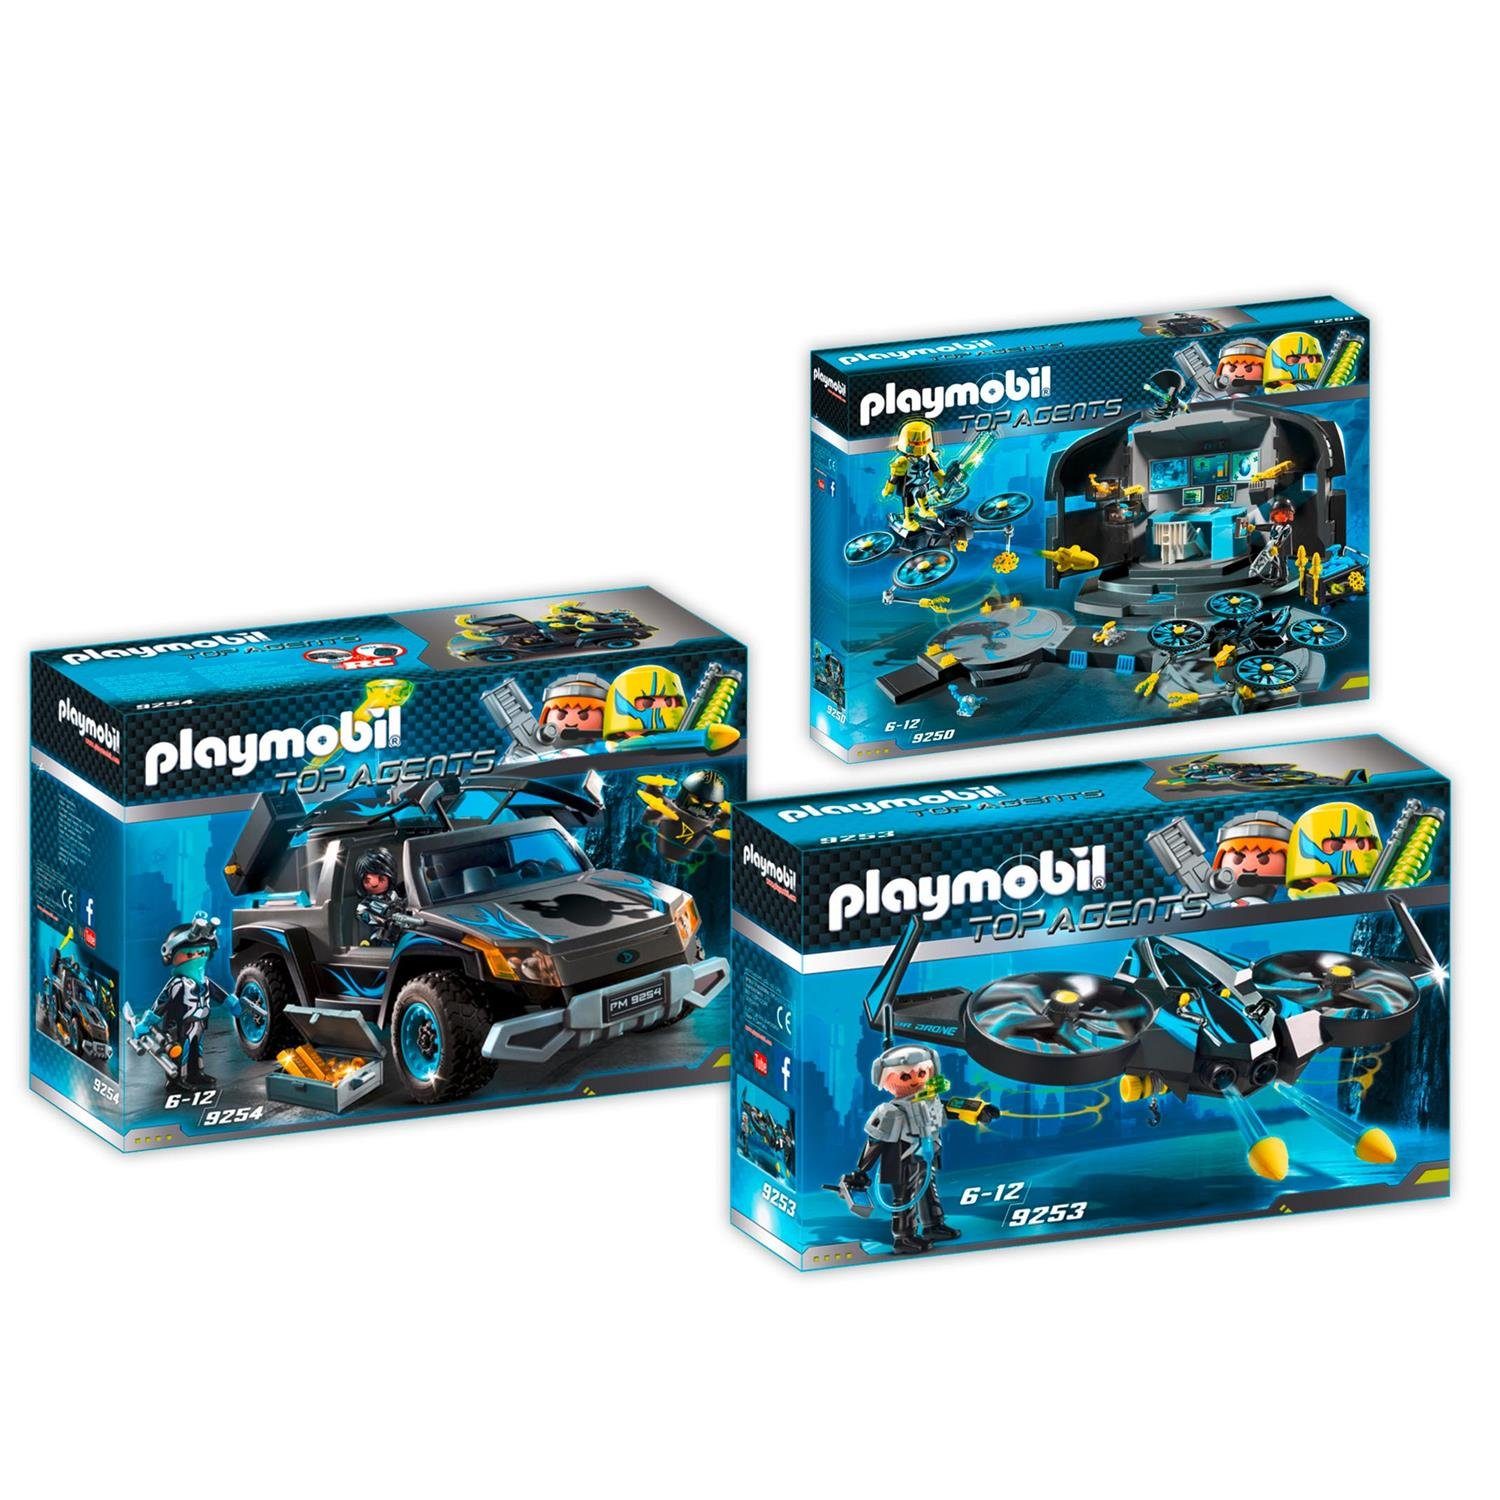 Playmobil® Spielbausteine 9250-53-54 Top Agents Set 3 - 3er Set 9250 + 9253  + 9254